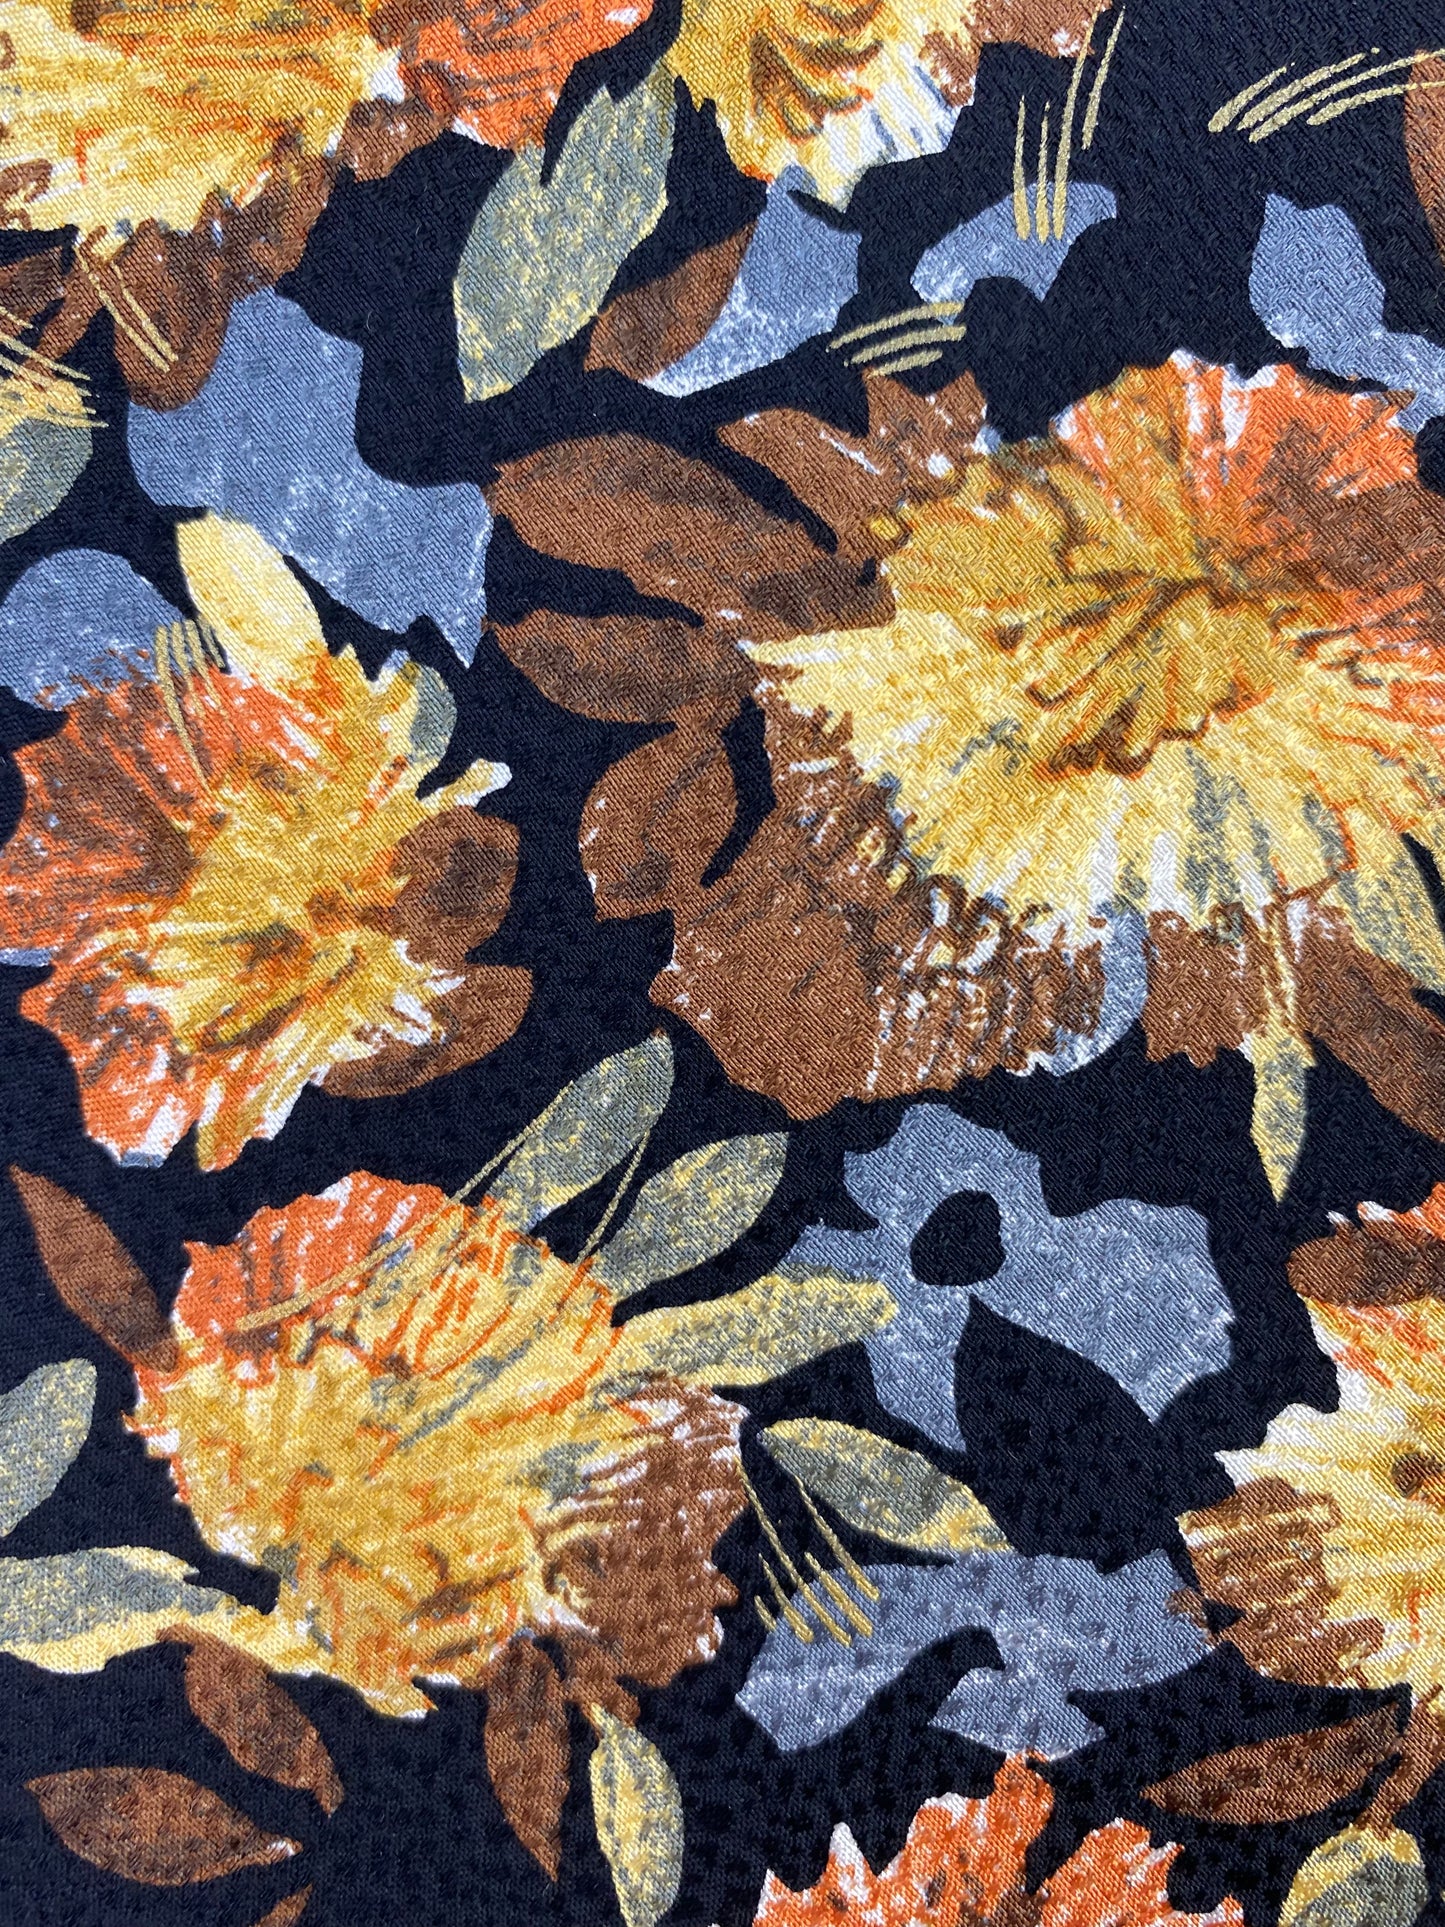 Close-up pattern detail of: 90s Deadstock Silk Necktie, Men's Vintage Gold Blue Floral Pattern Tie, Black Background, NOS